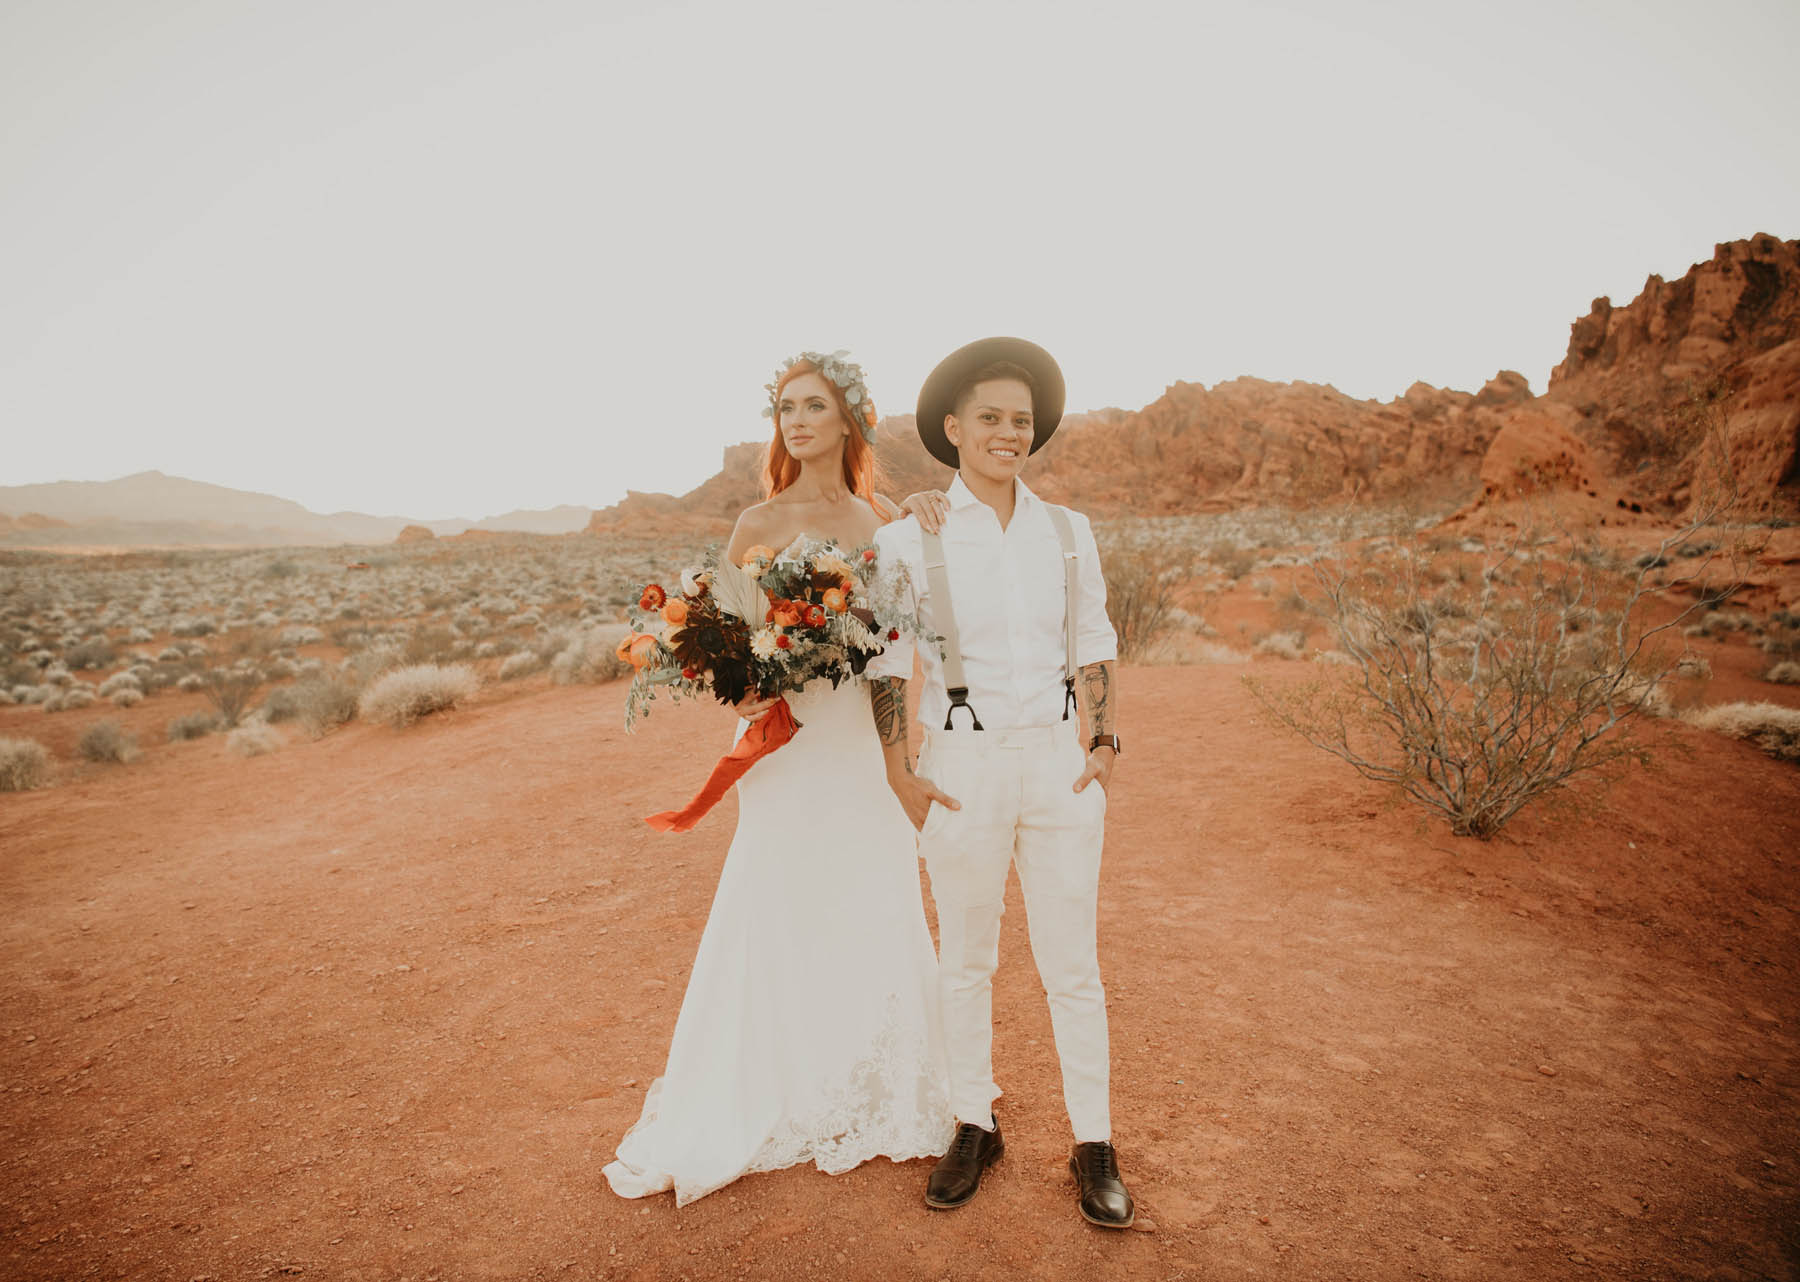 An intimate Las Vegas desert wedding with boho vibes and a spiritual sand unity ceremony